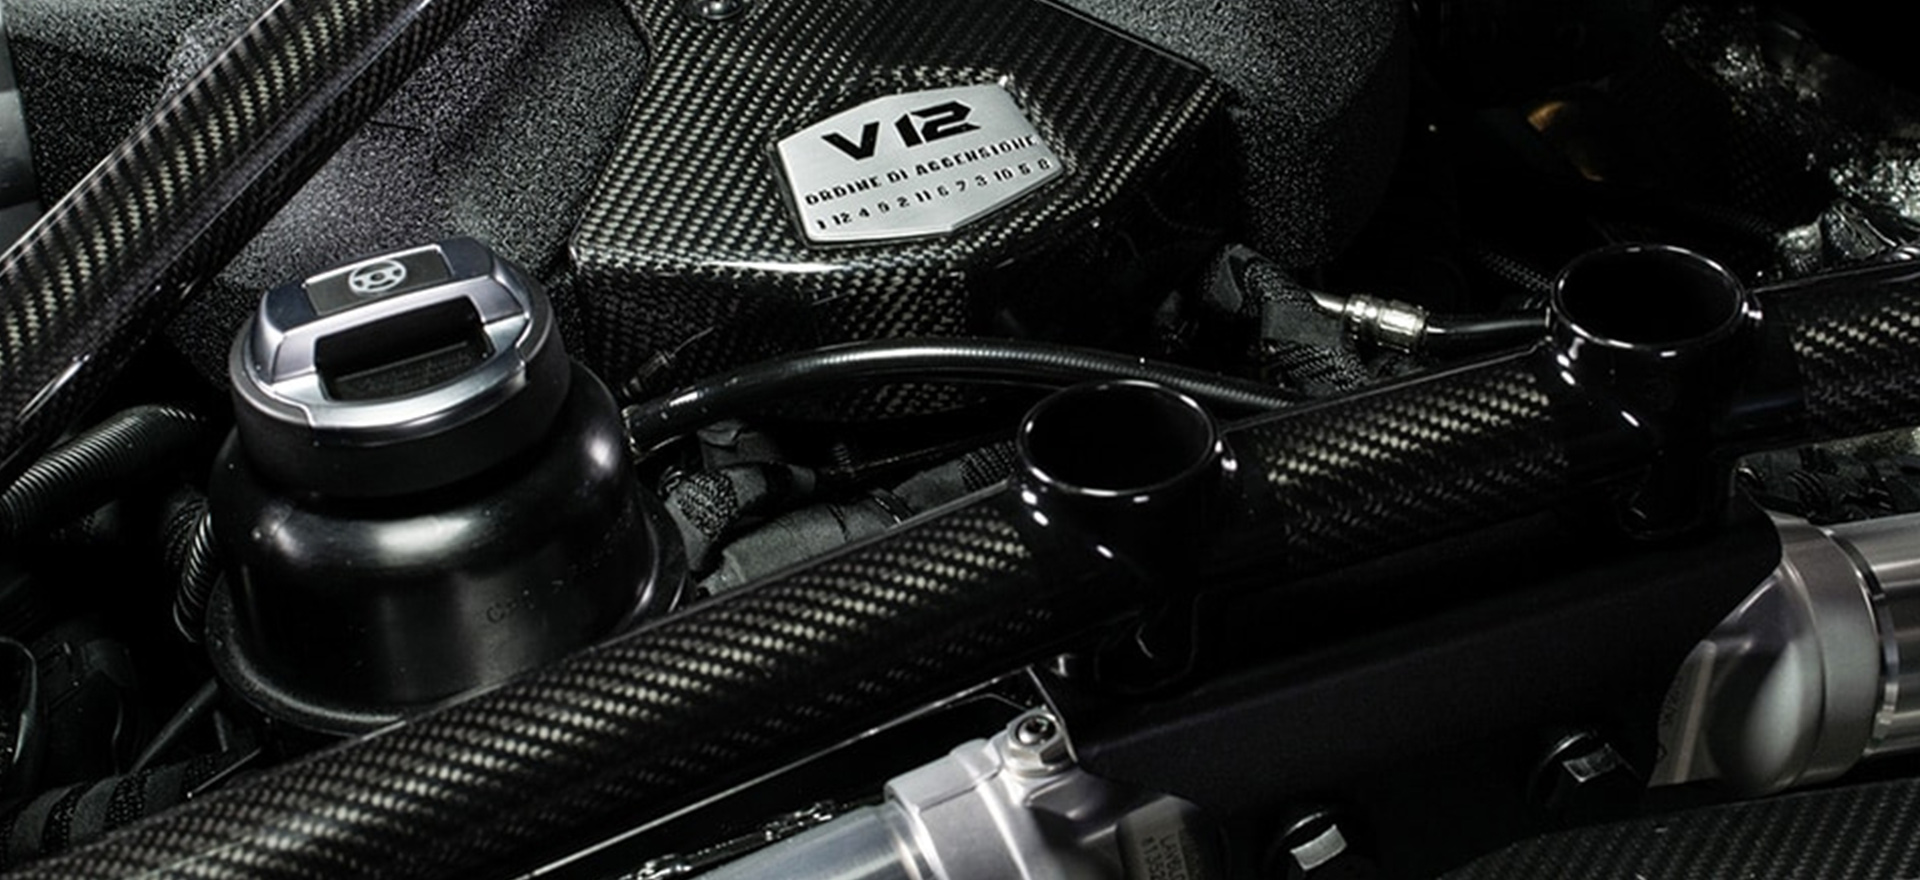 Lamborghini is rewriting the rules on carbon fiber